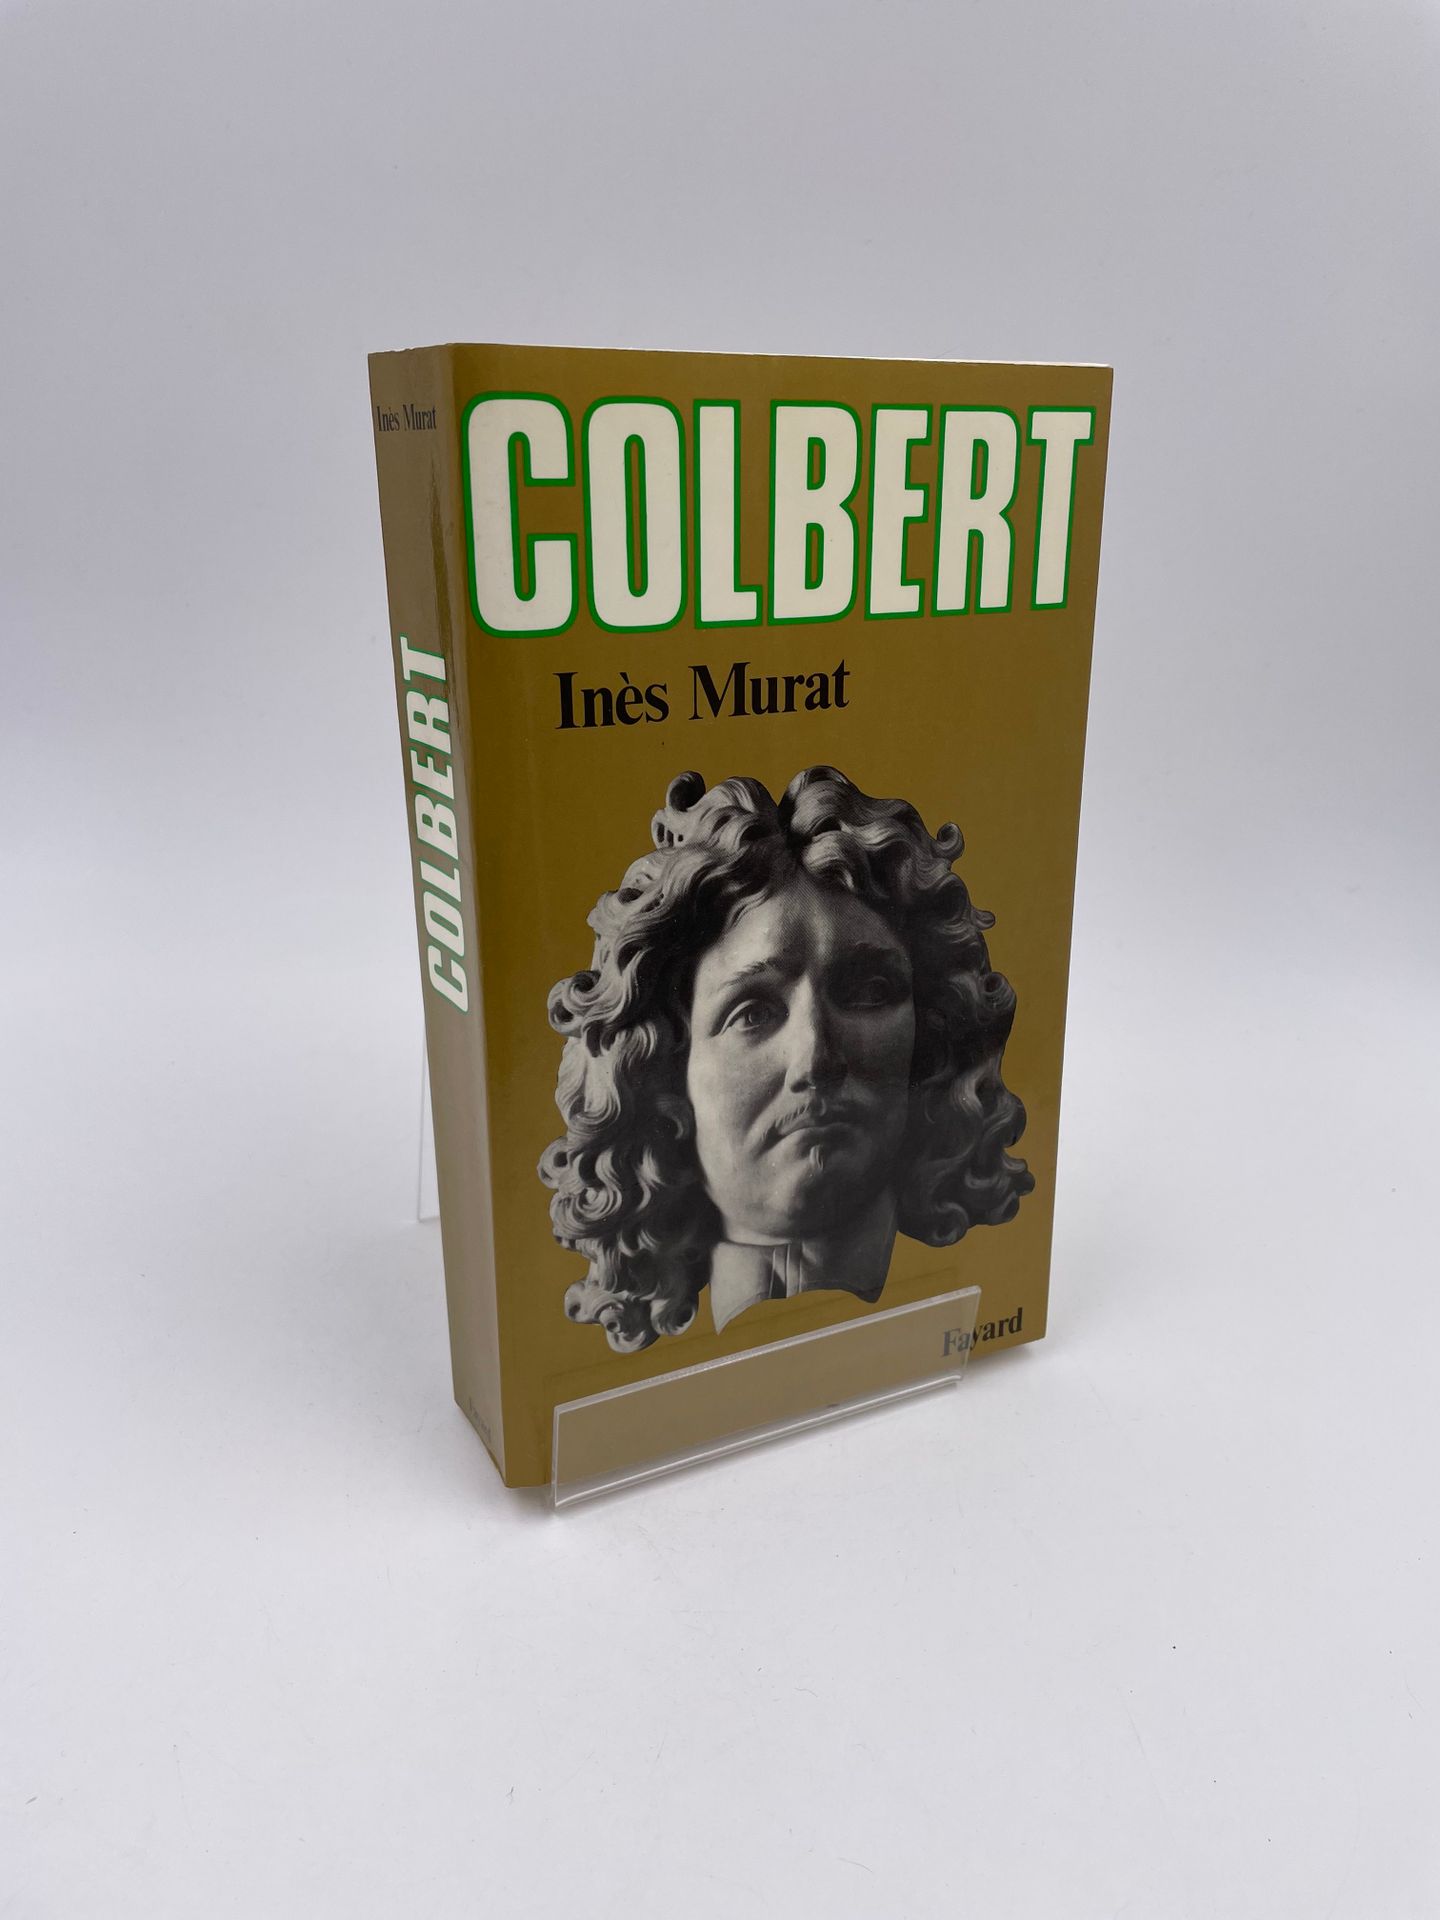 Null 1 Volume : "COLBERT", Inès Murat, Ed. Fayard, 1980